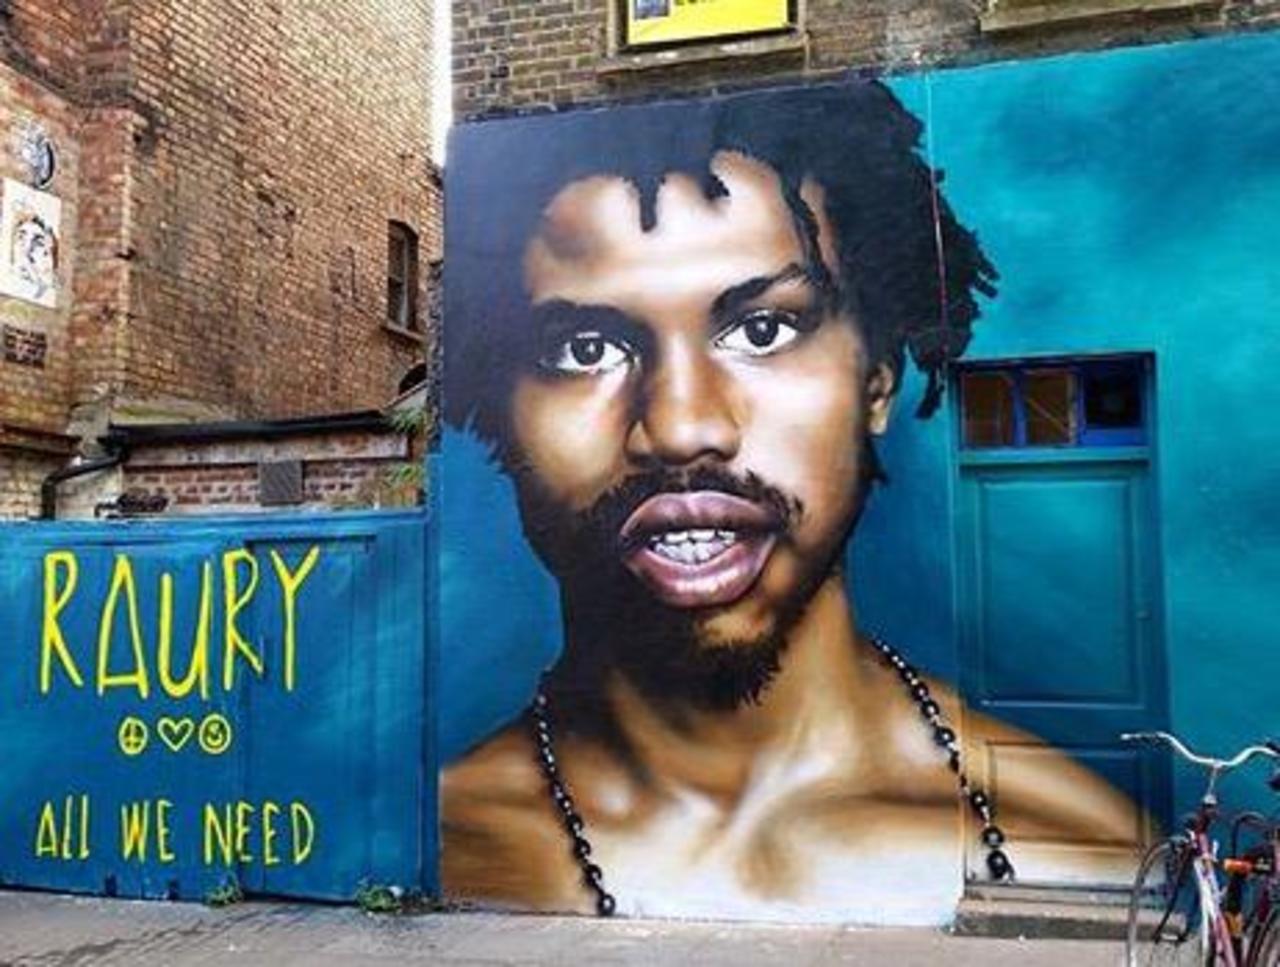 New Street Art of Raury by Olliver Switch in Brick Lane 

#art #graffiti #mural #streetart http://t.co/7L6PNMQWIO